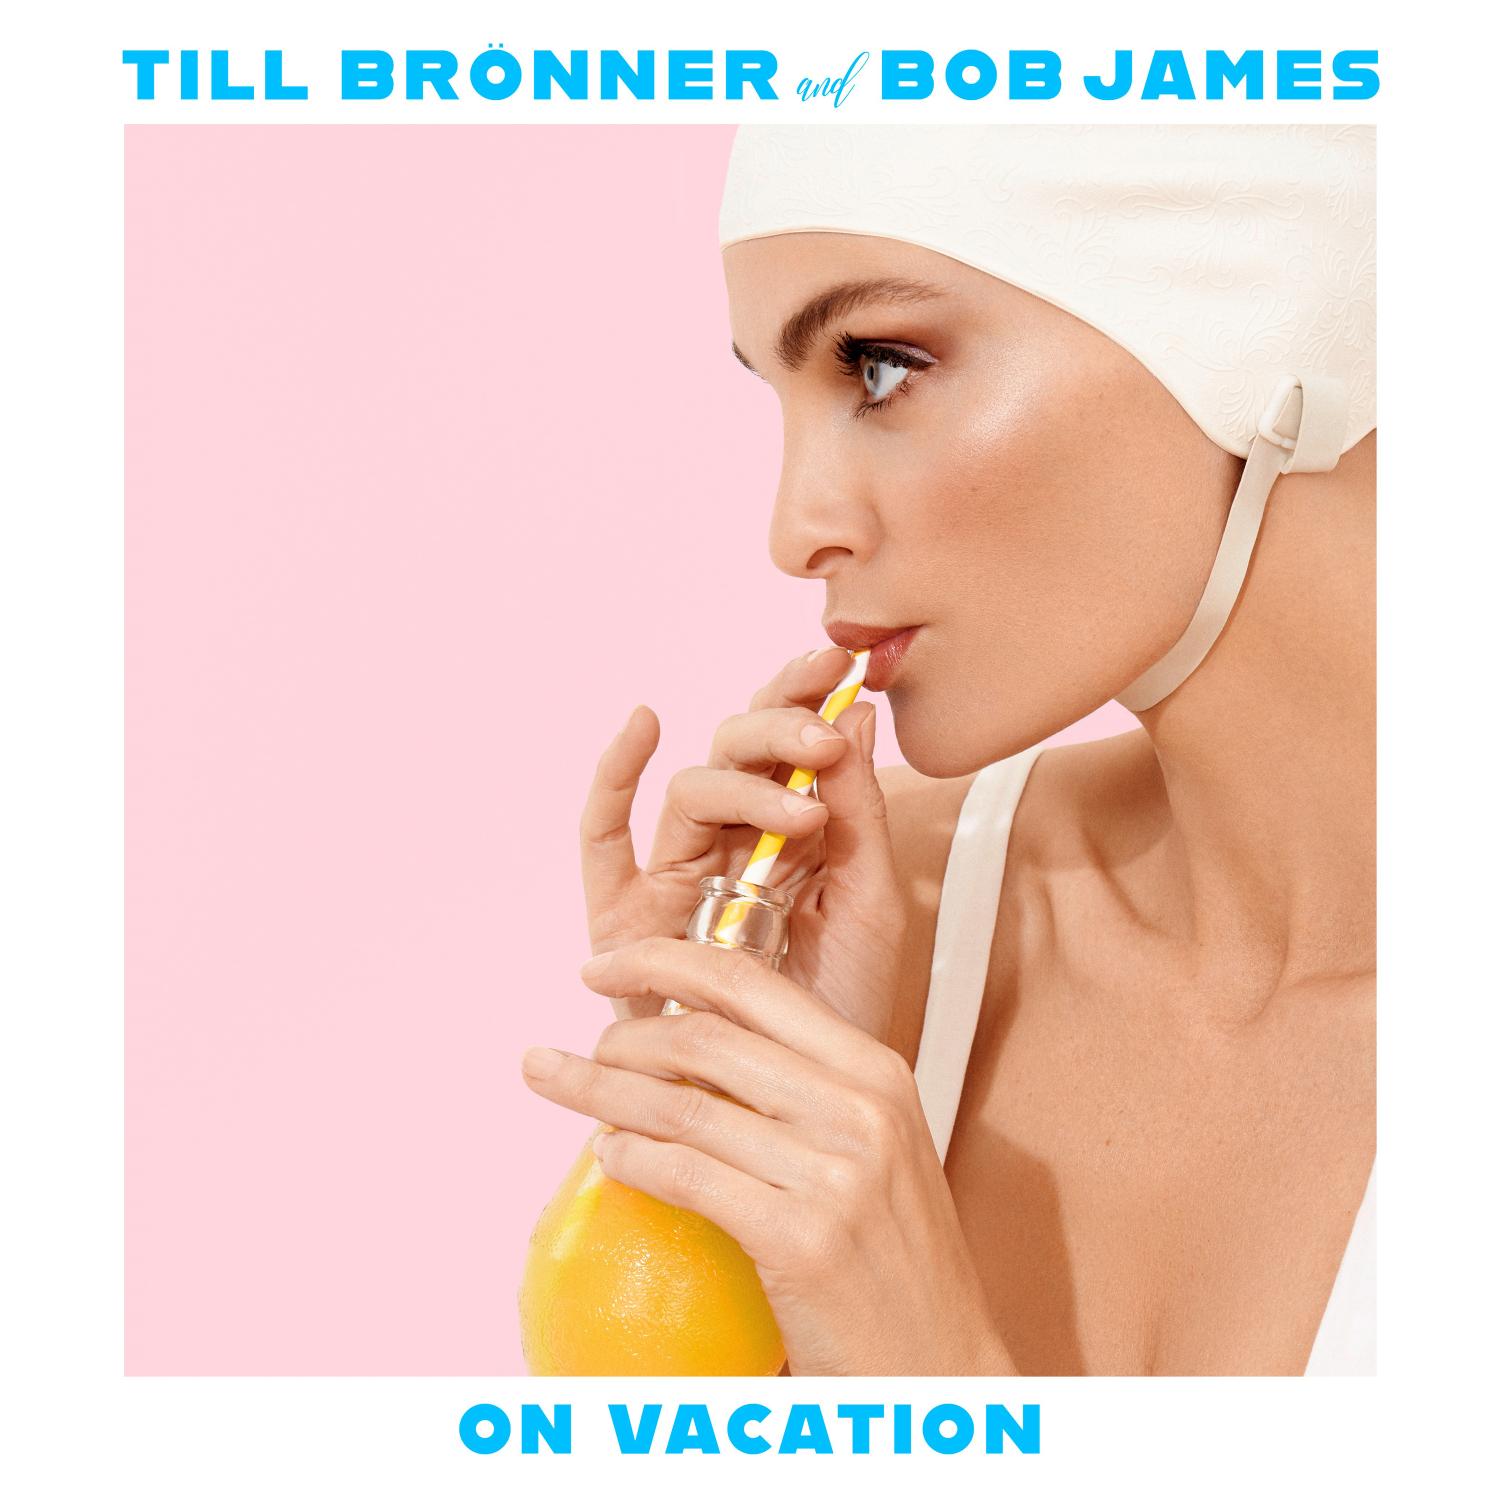 kathrin-hohberg-till-broenner-bob-james-album-cover-vacation-01